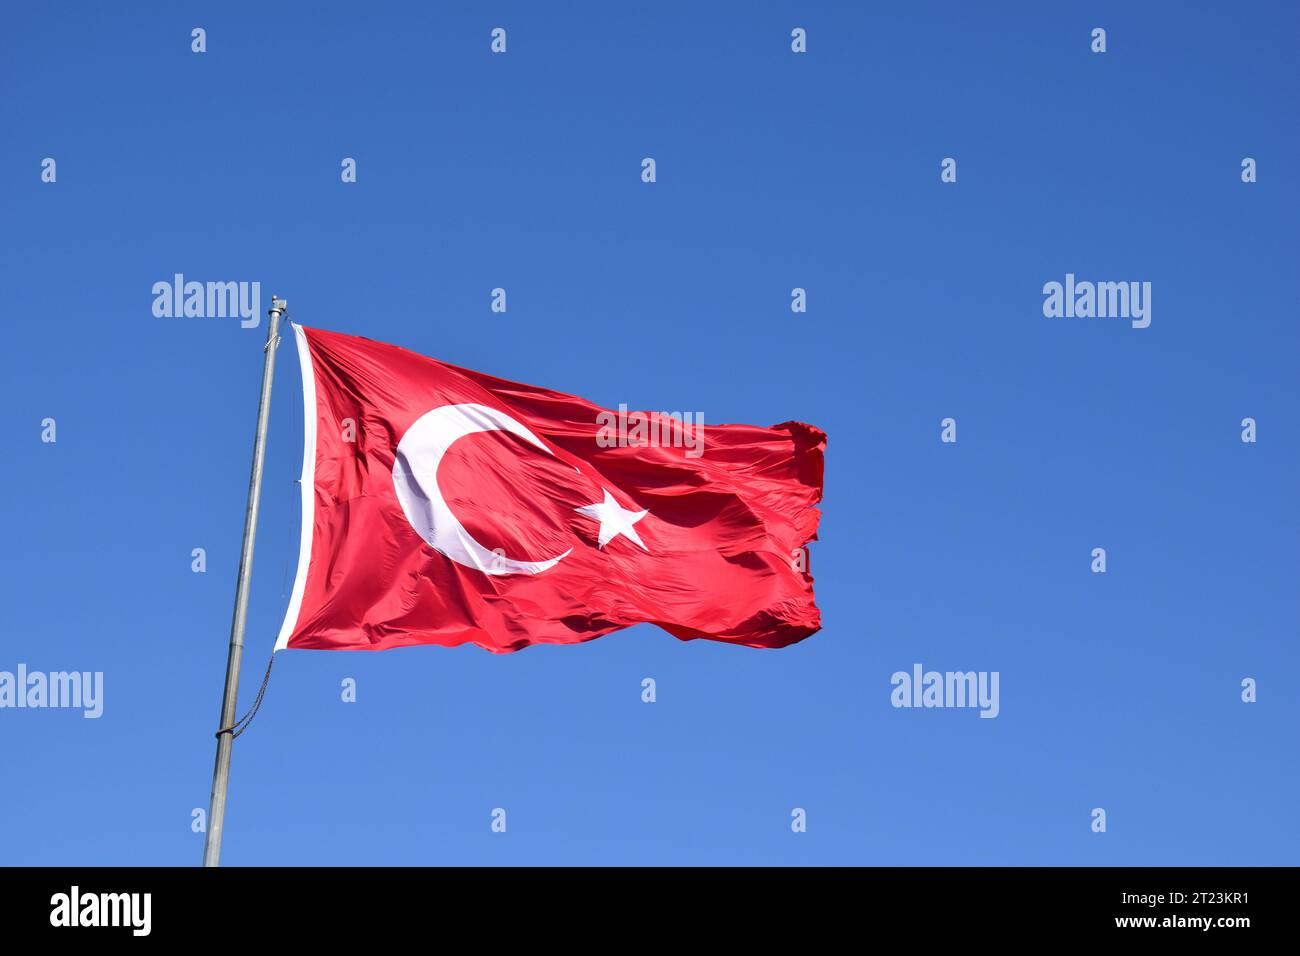 Waving Turkish Flag or Flag of Turkey on Blue Sky. Stock Photo